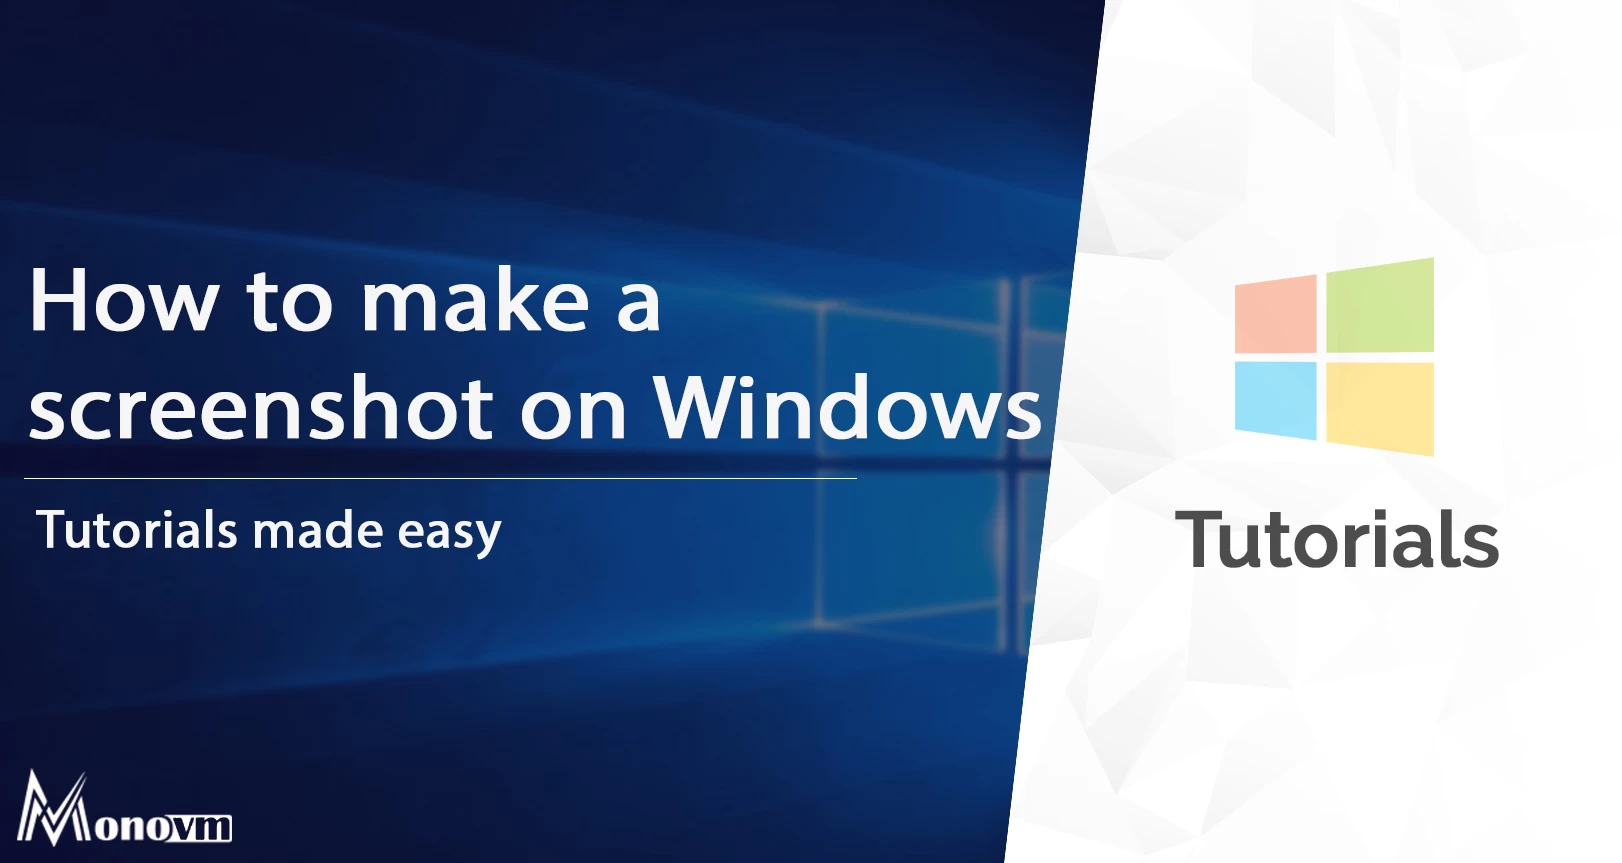 Fantastic Ways on How to Take a Screenshot on Windows